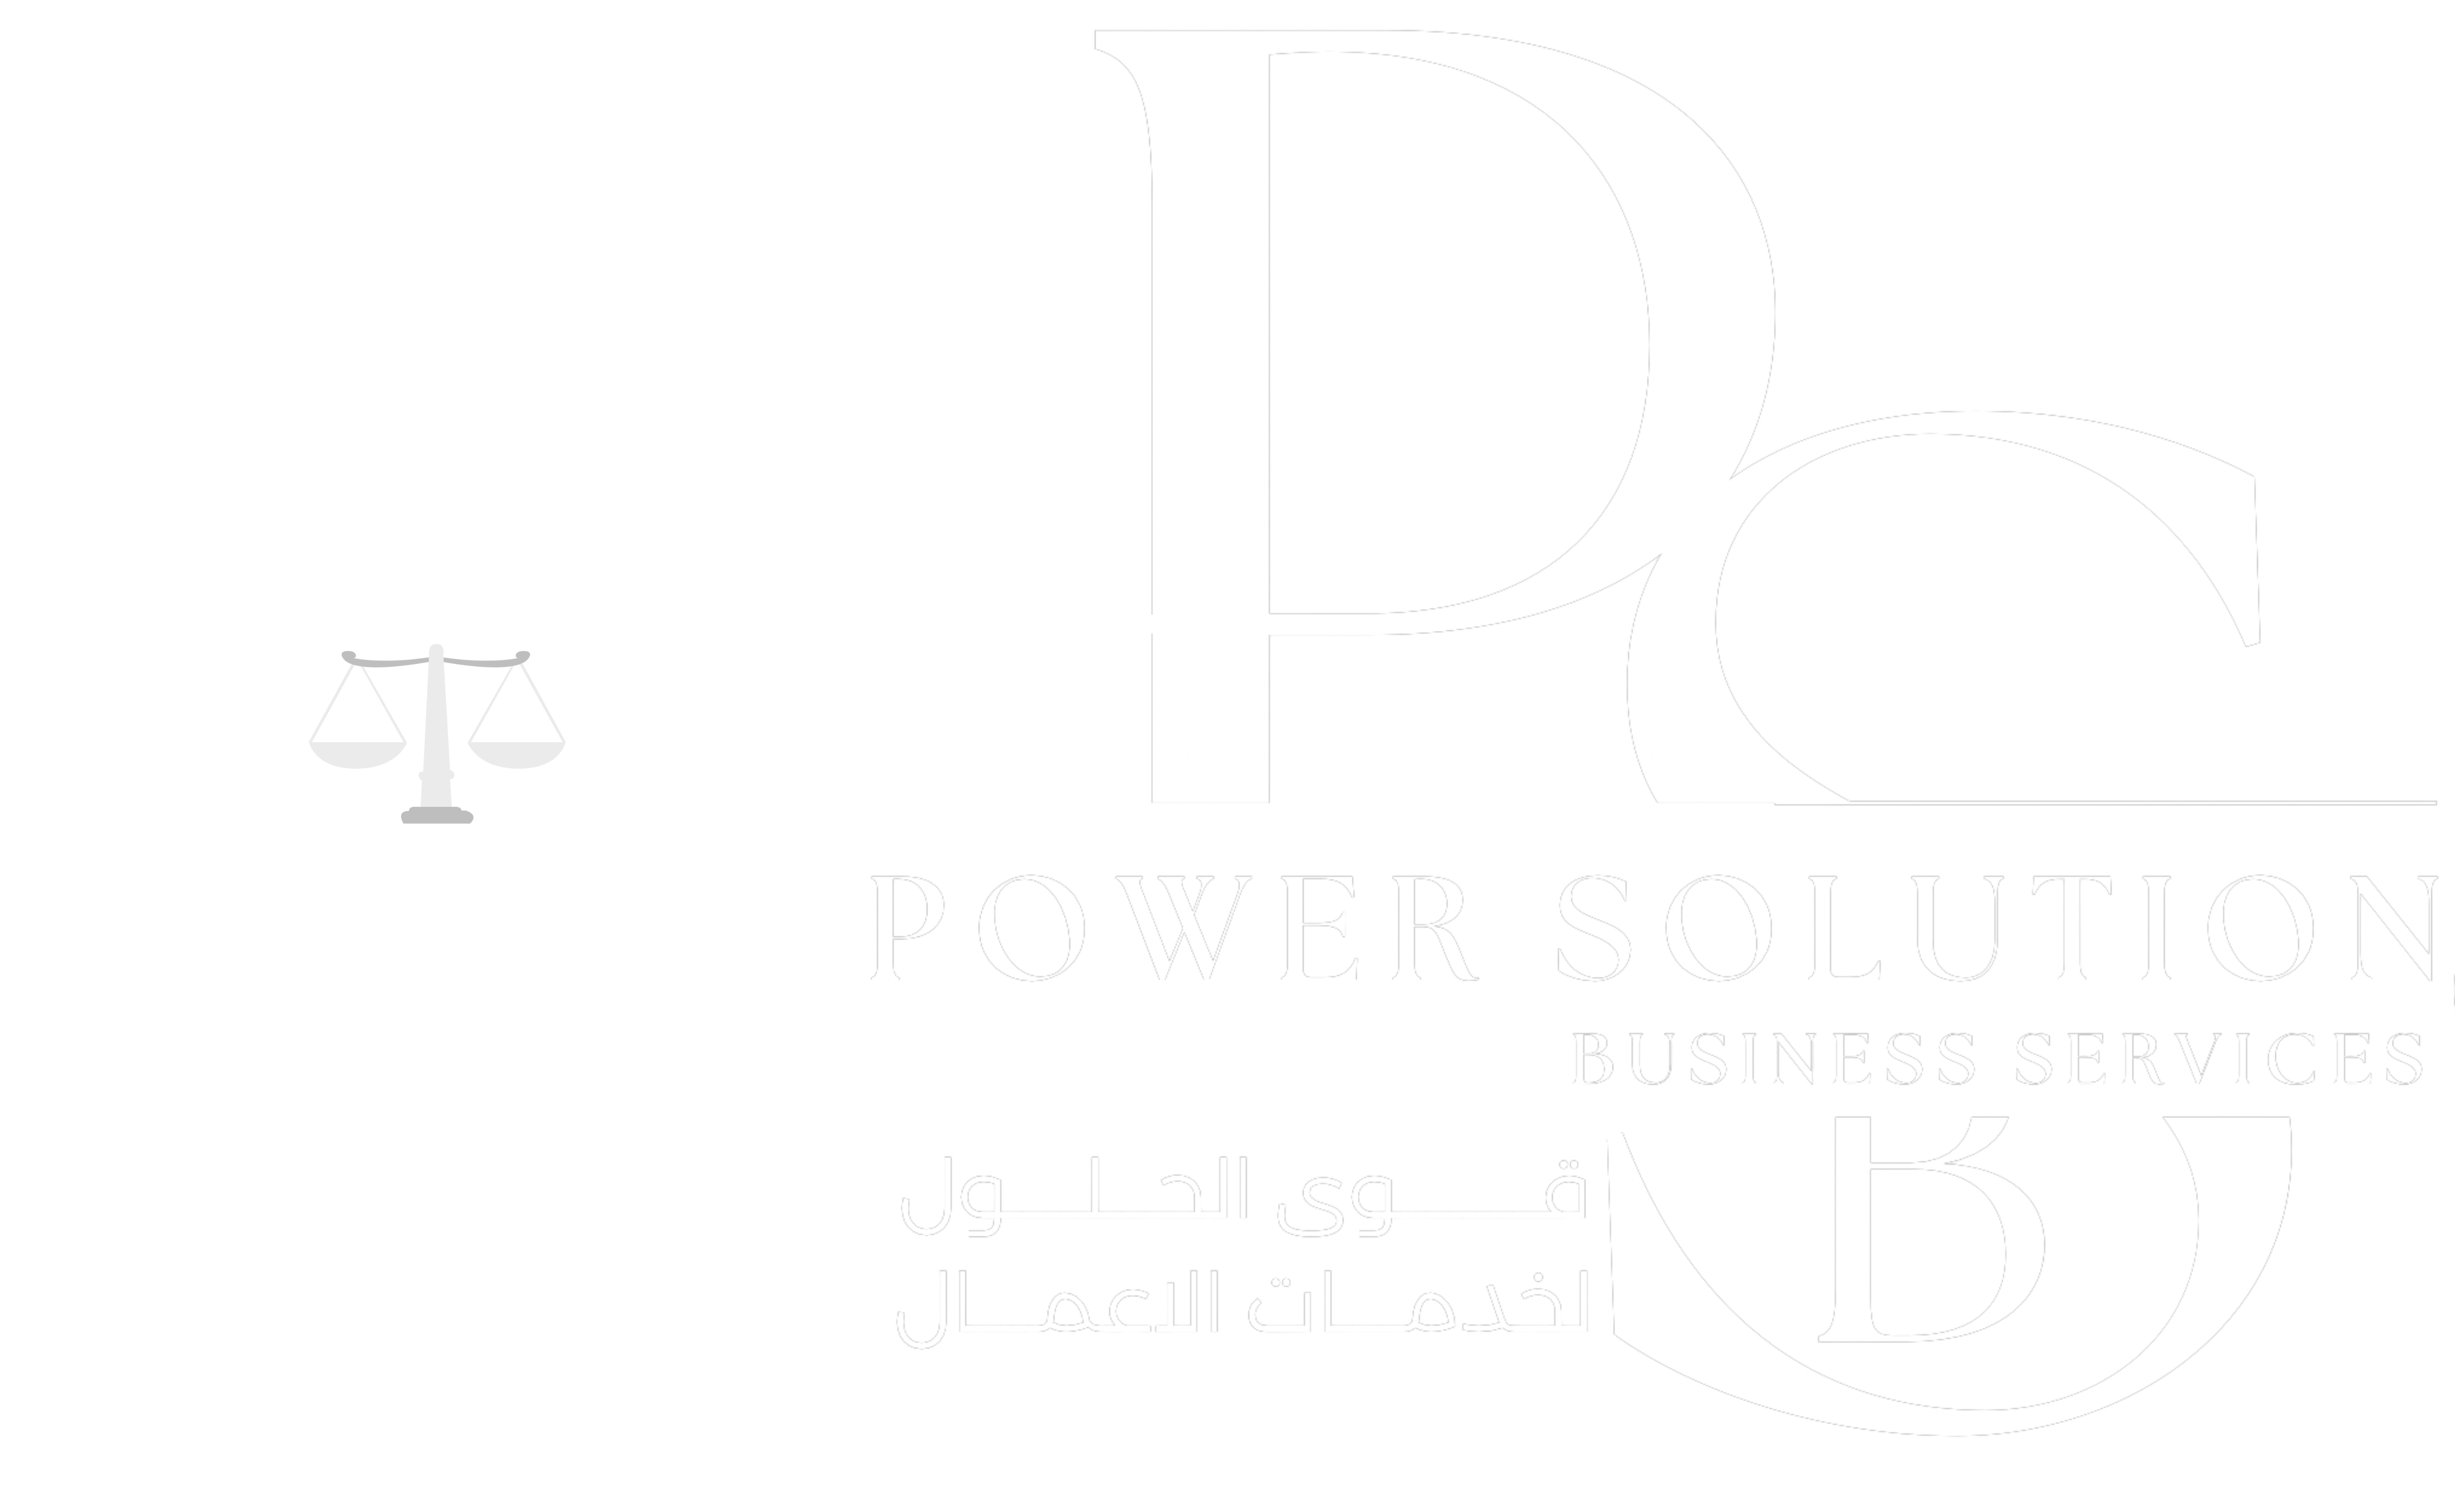 Power Solution Ltd